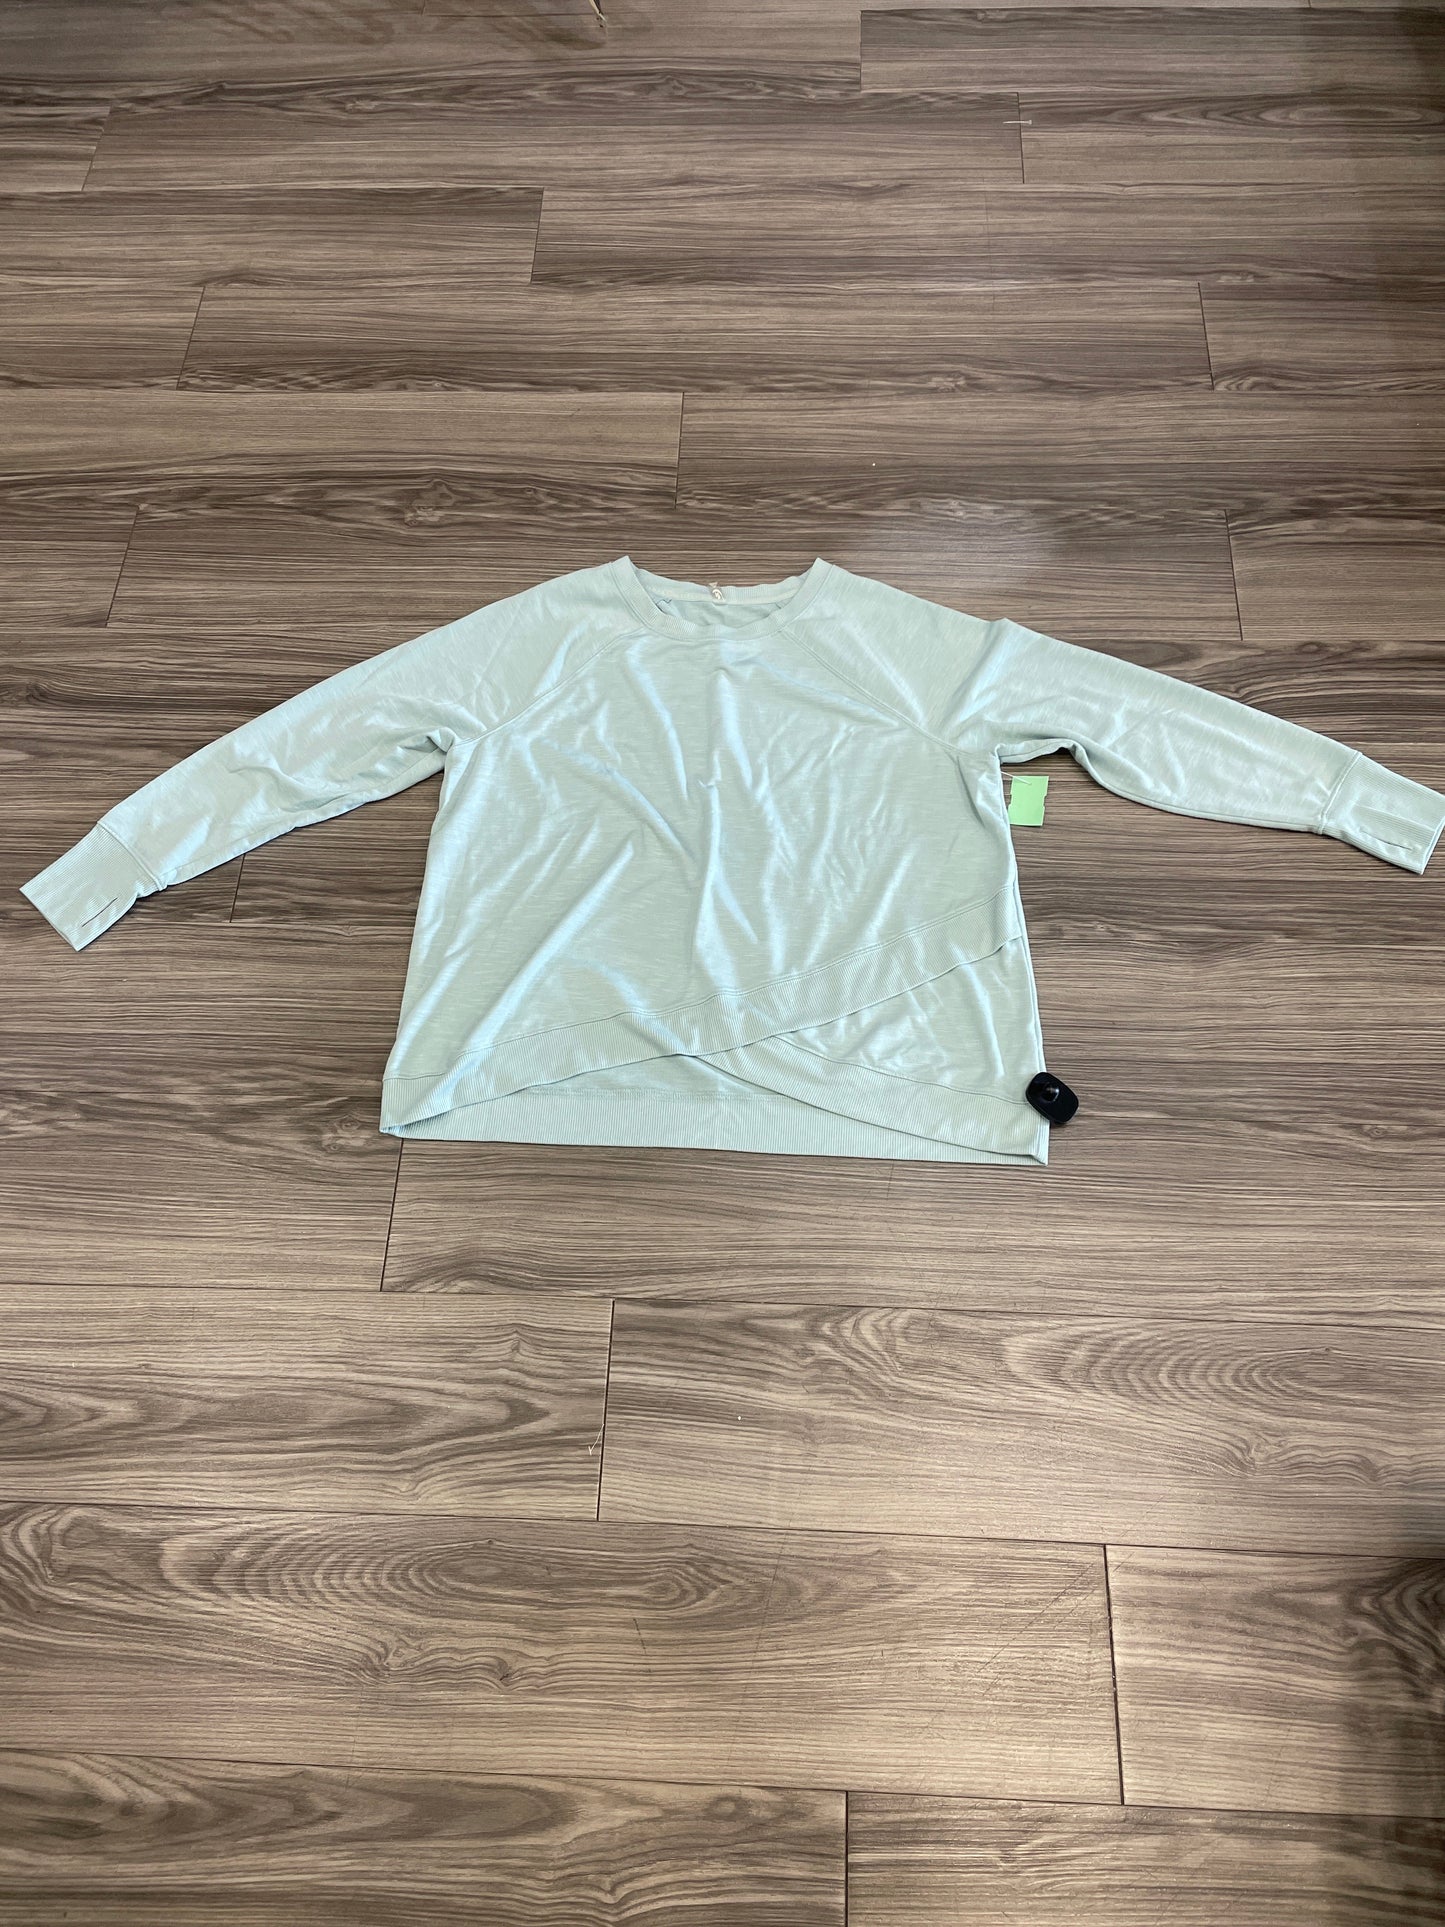 Teal Sweatshirt Crewneck Clothes Mentor, Size 1x